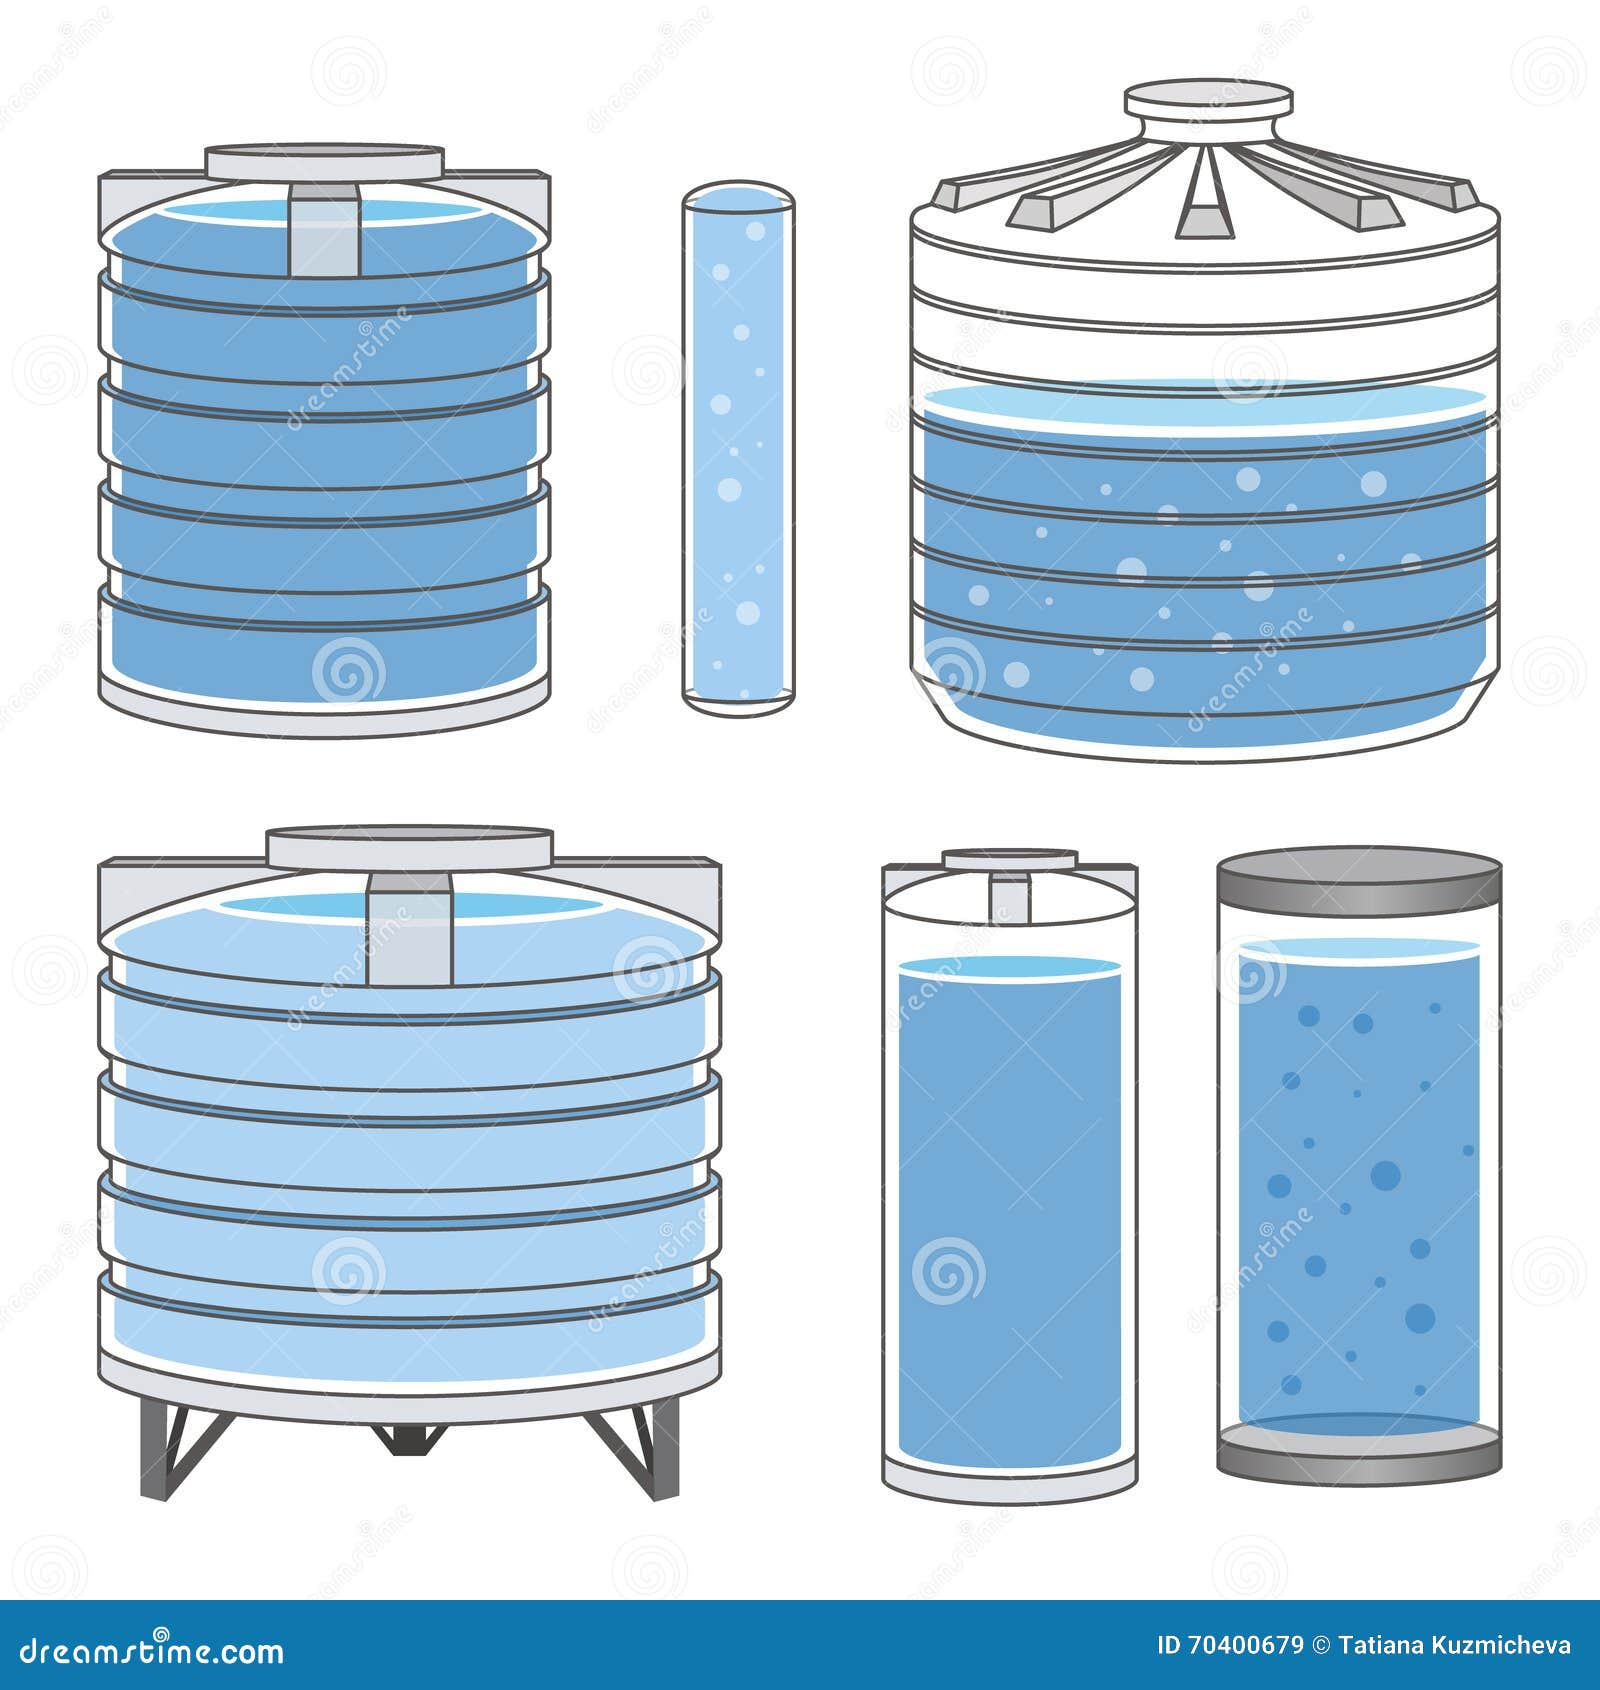 https://thumbs.dreamstime.com/z/industrial-water-tanks-set-vector-full-illustration-70400679.jpg